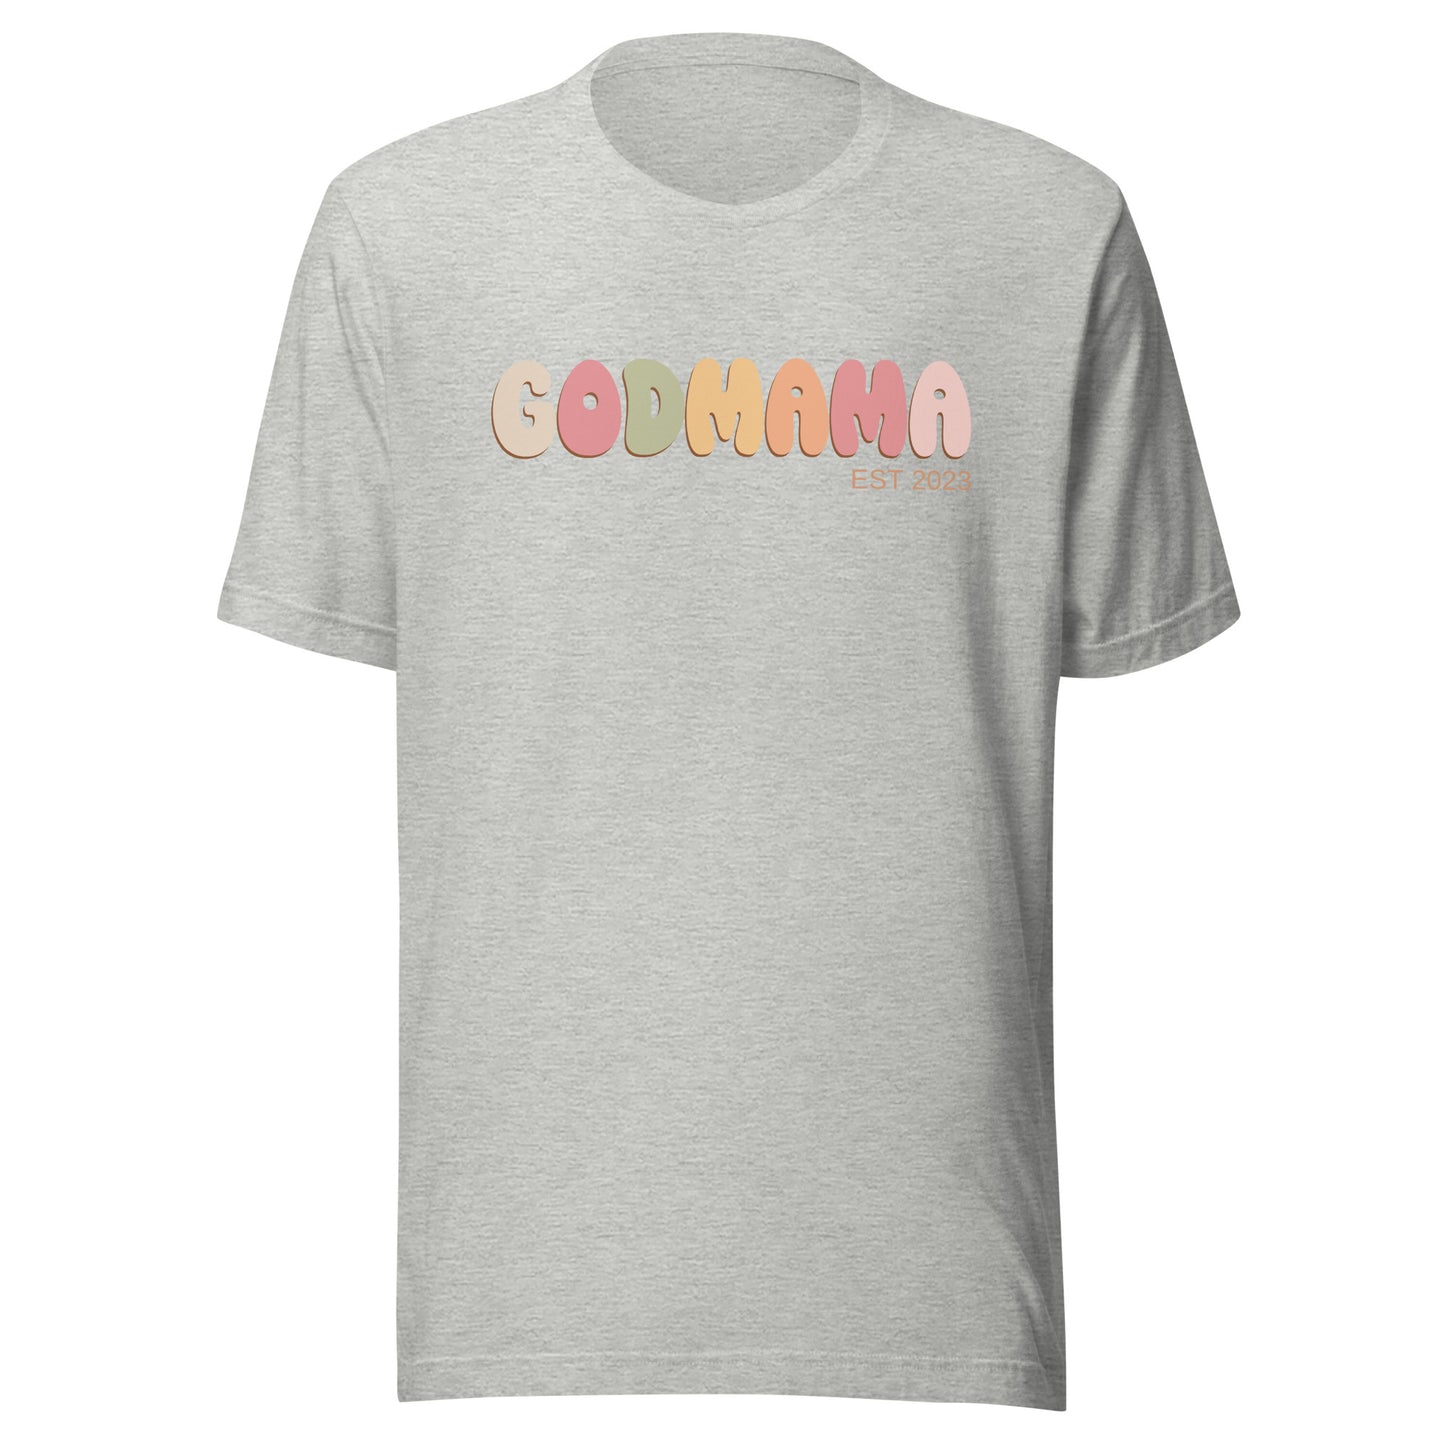 Custom Godmama T-shirt